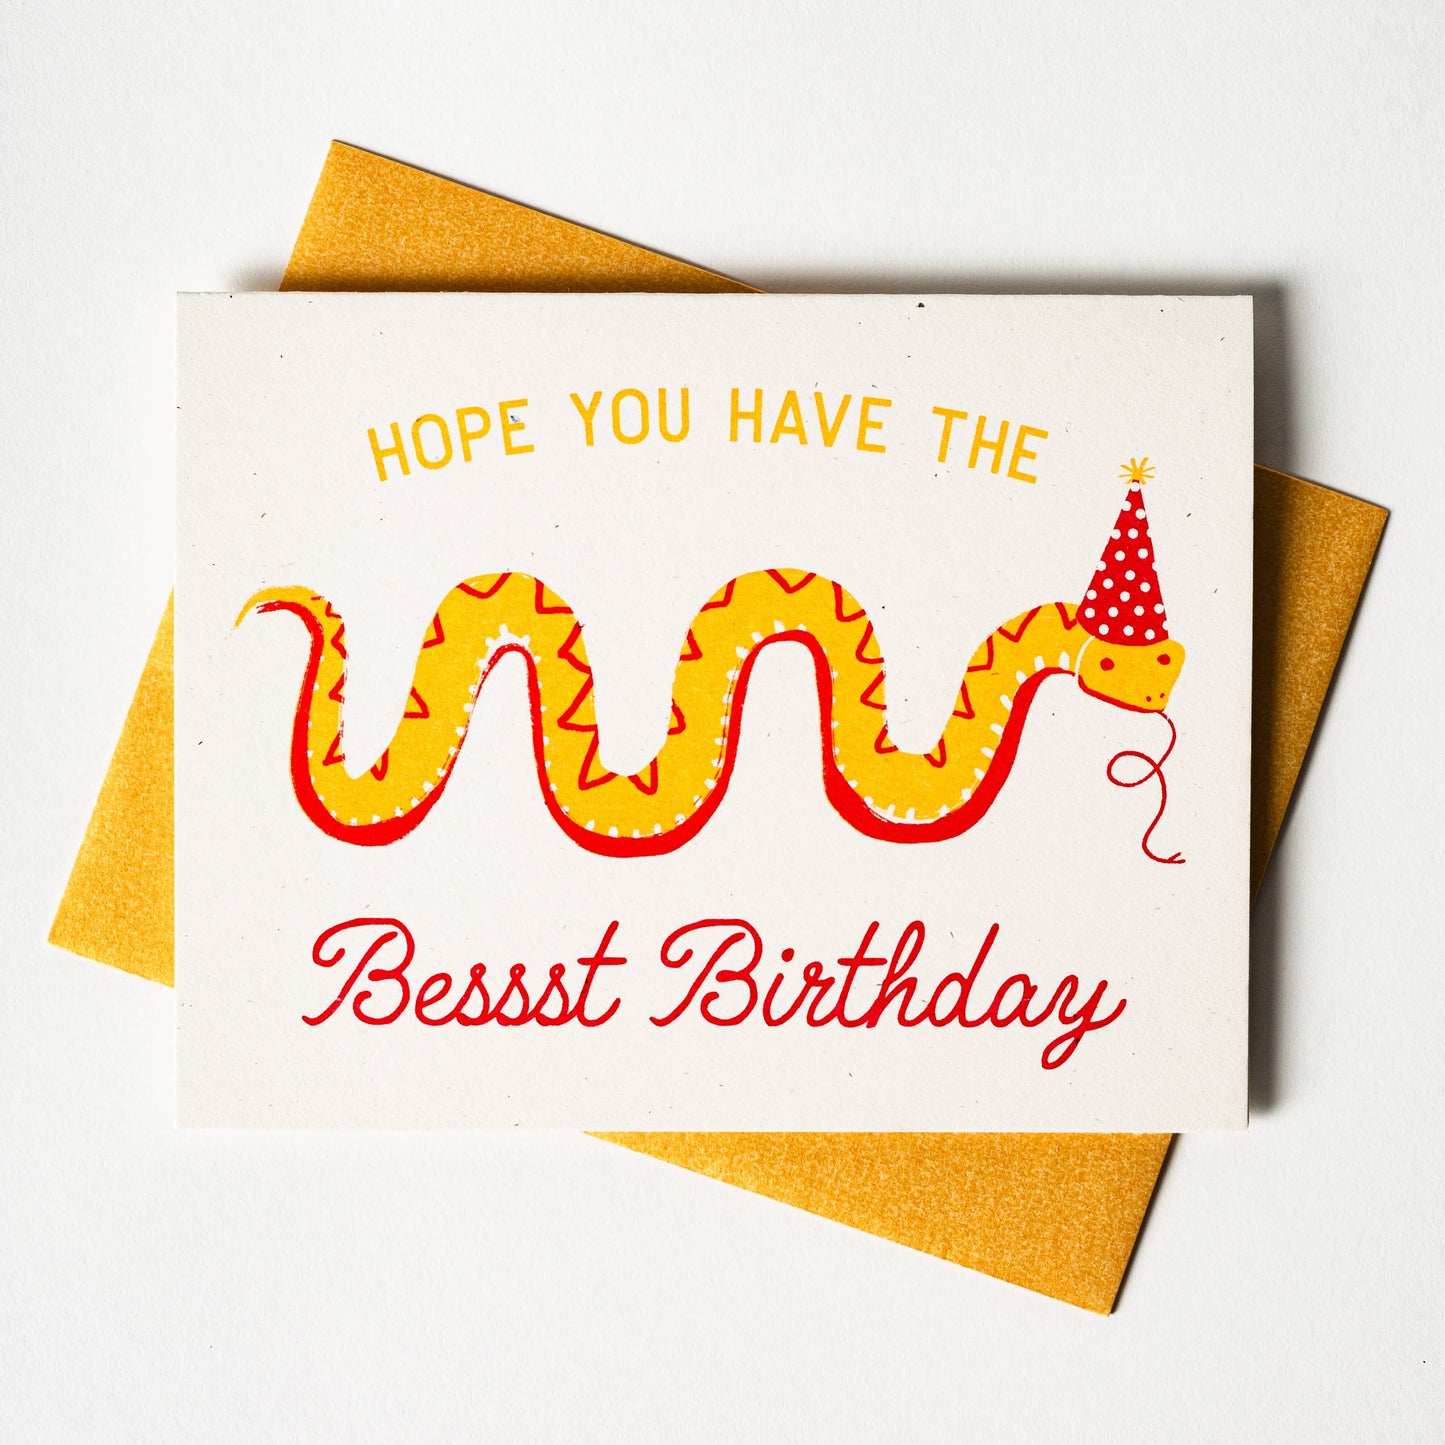 Bessst Birthday Card